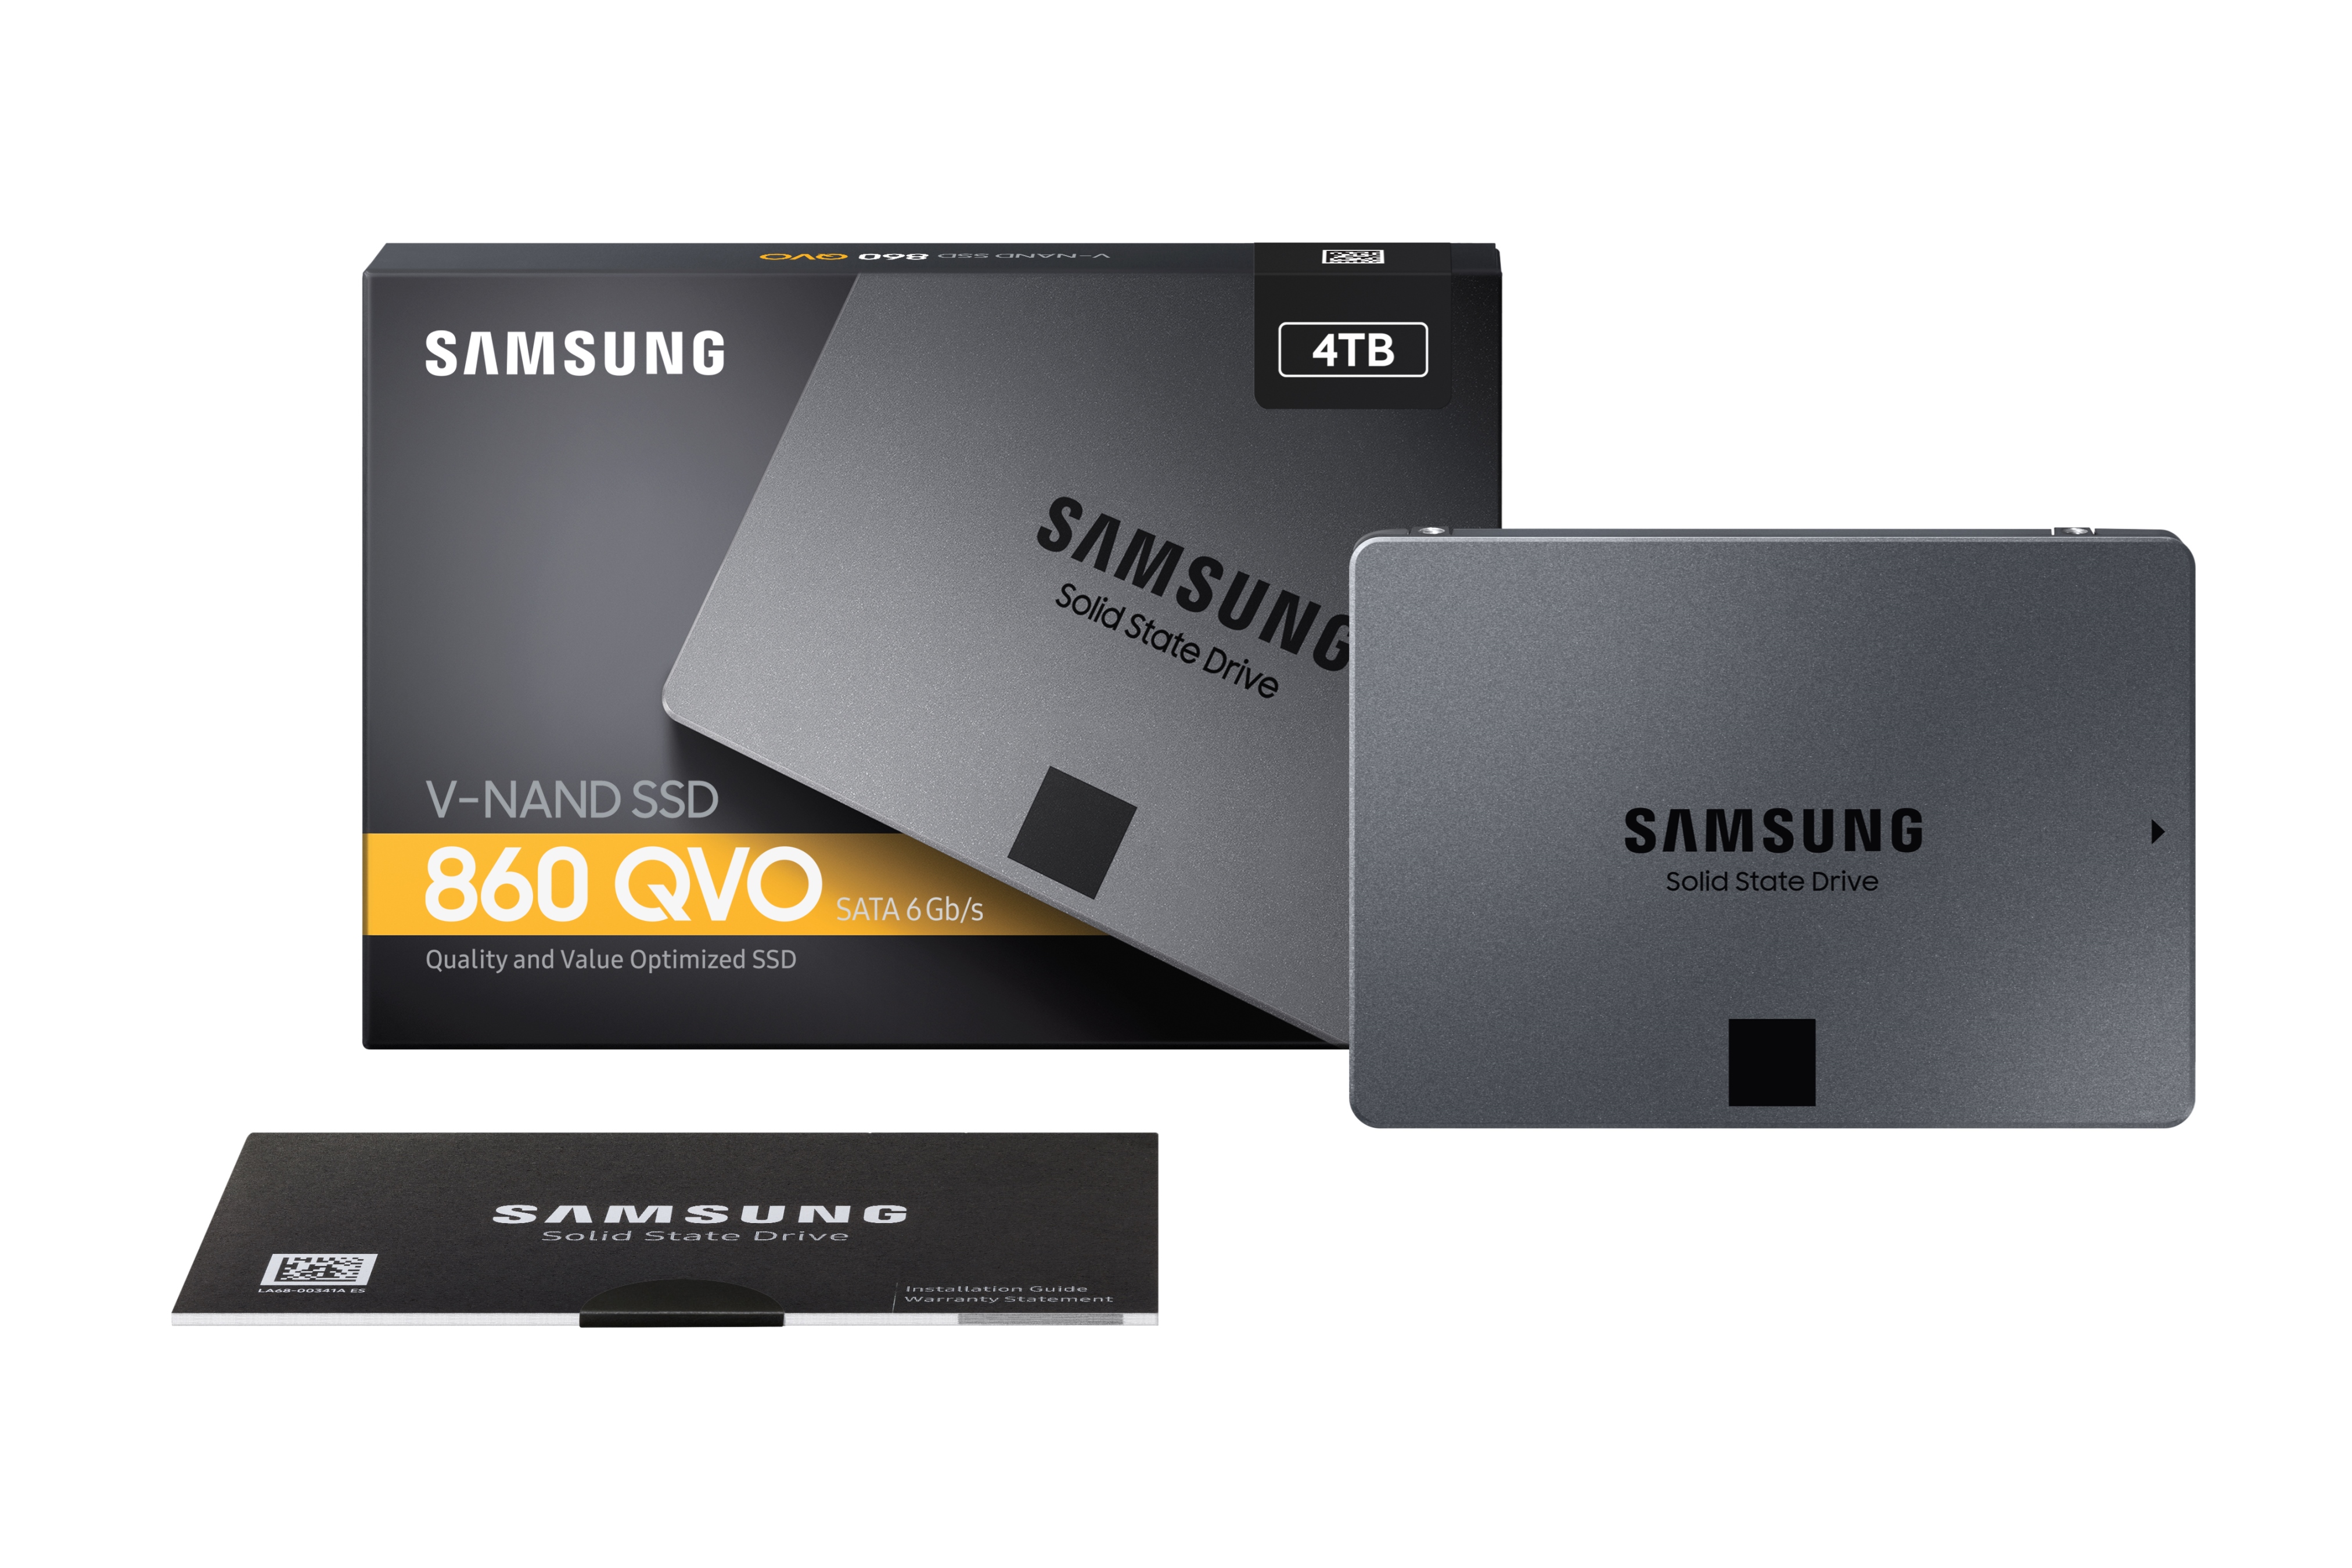 Samsung India Brings 860 QVO SSD; Multi-terabyte Storage Capacity at an